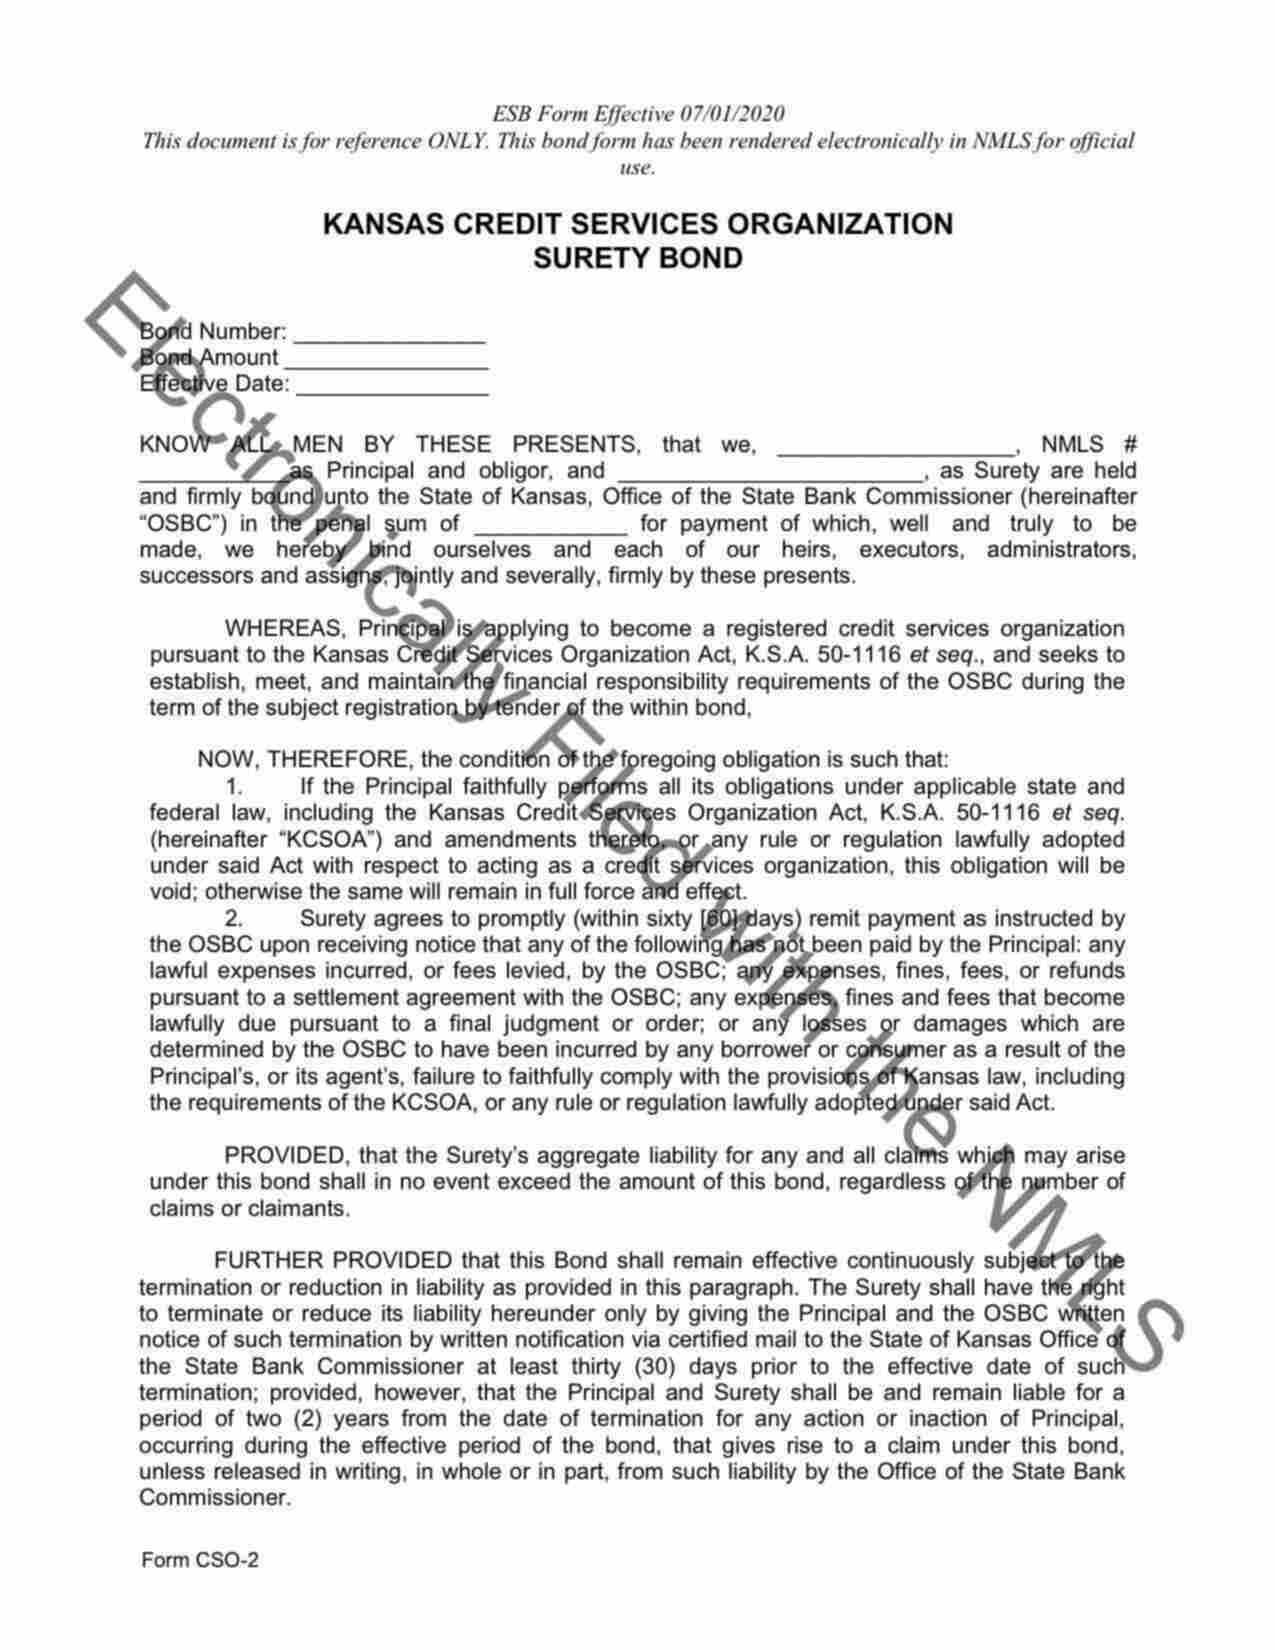 Kansas Credit Services Organization Bond Form